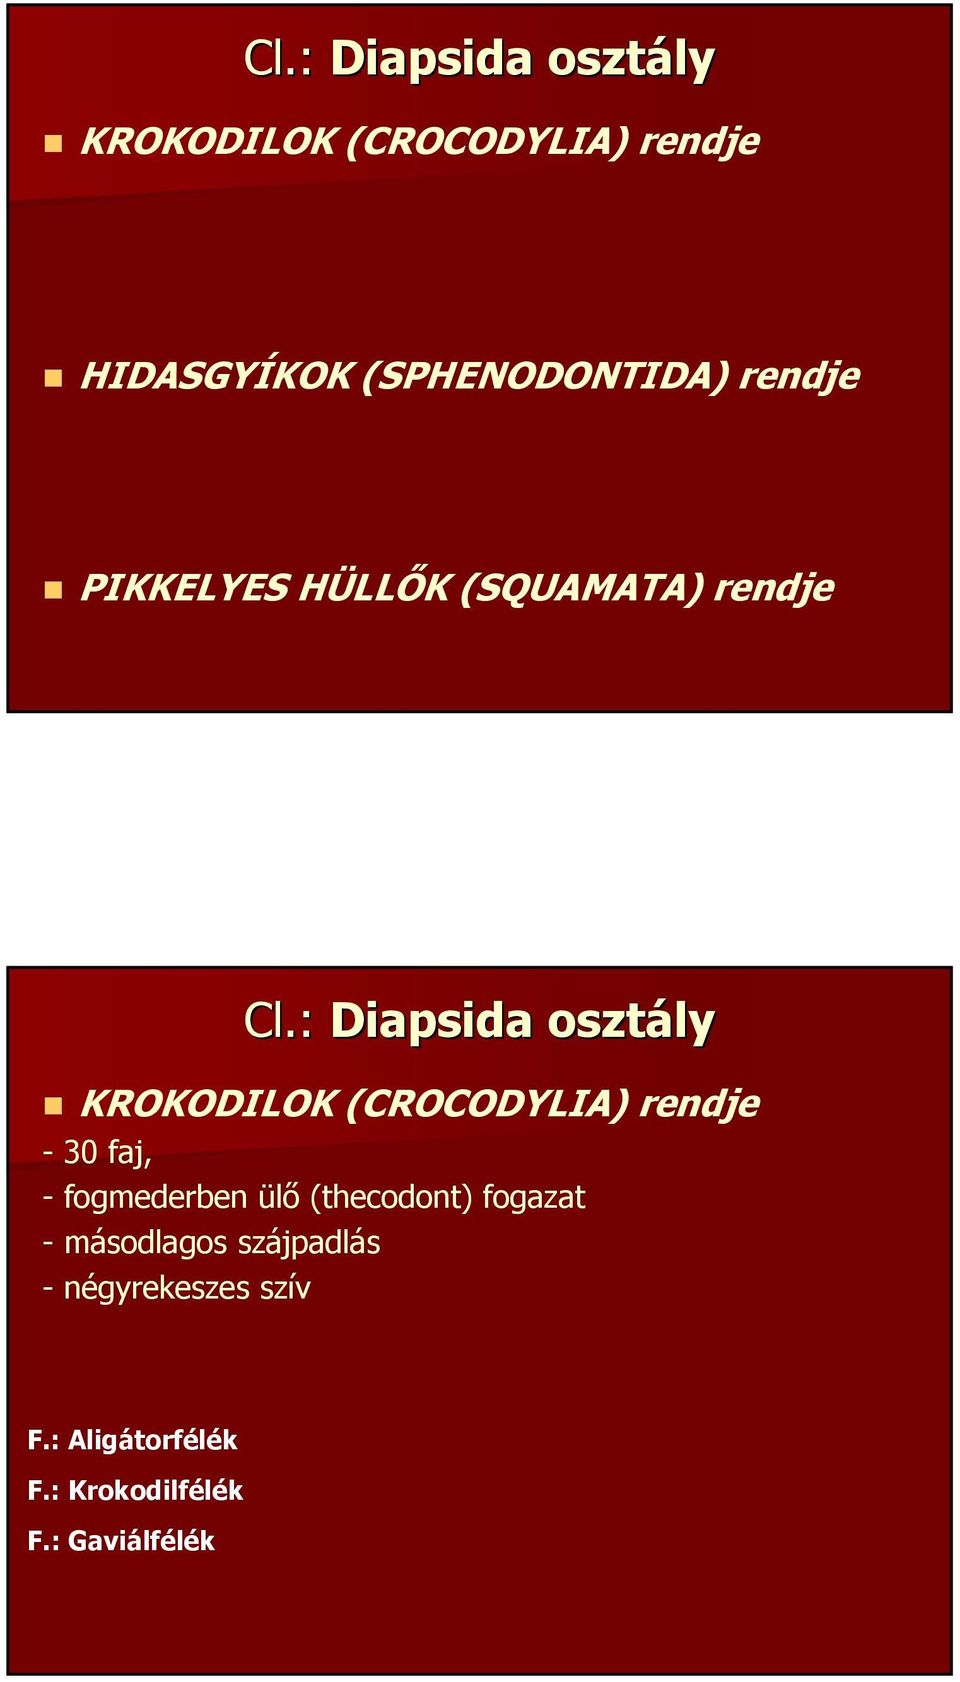 : Diapsida osztály KROKODILOK (CROCODYLIA) rendje - 30 faj, -fogmederben ülő